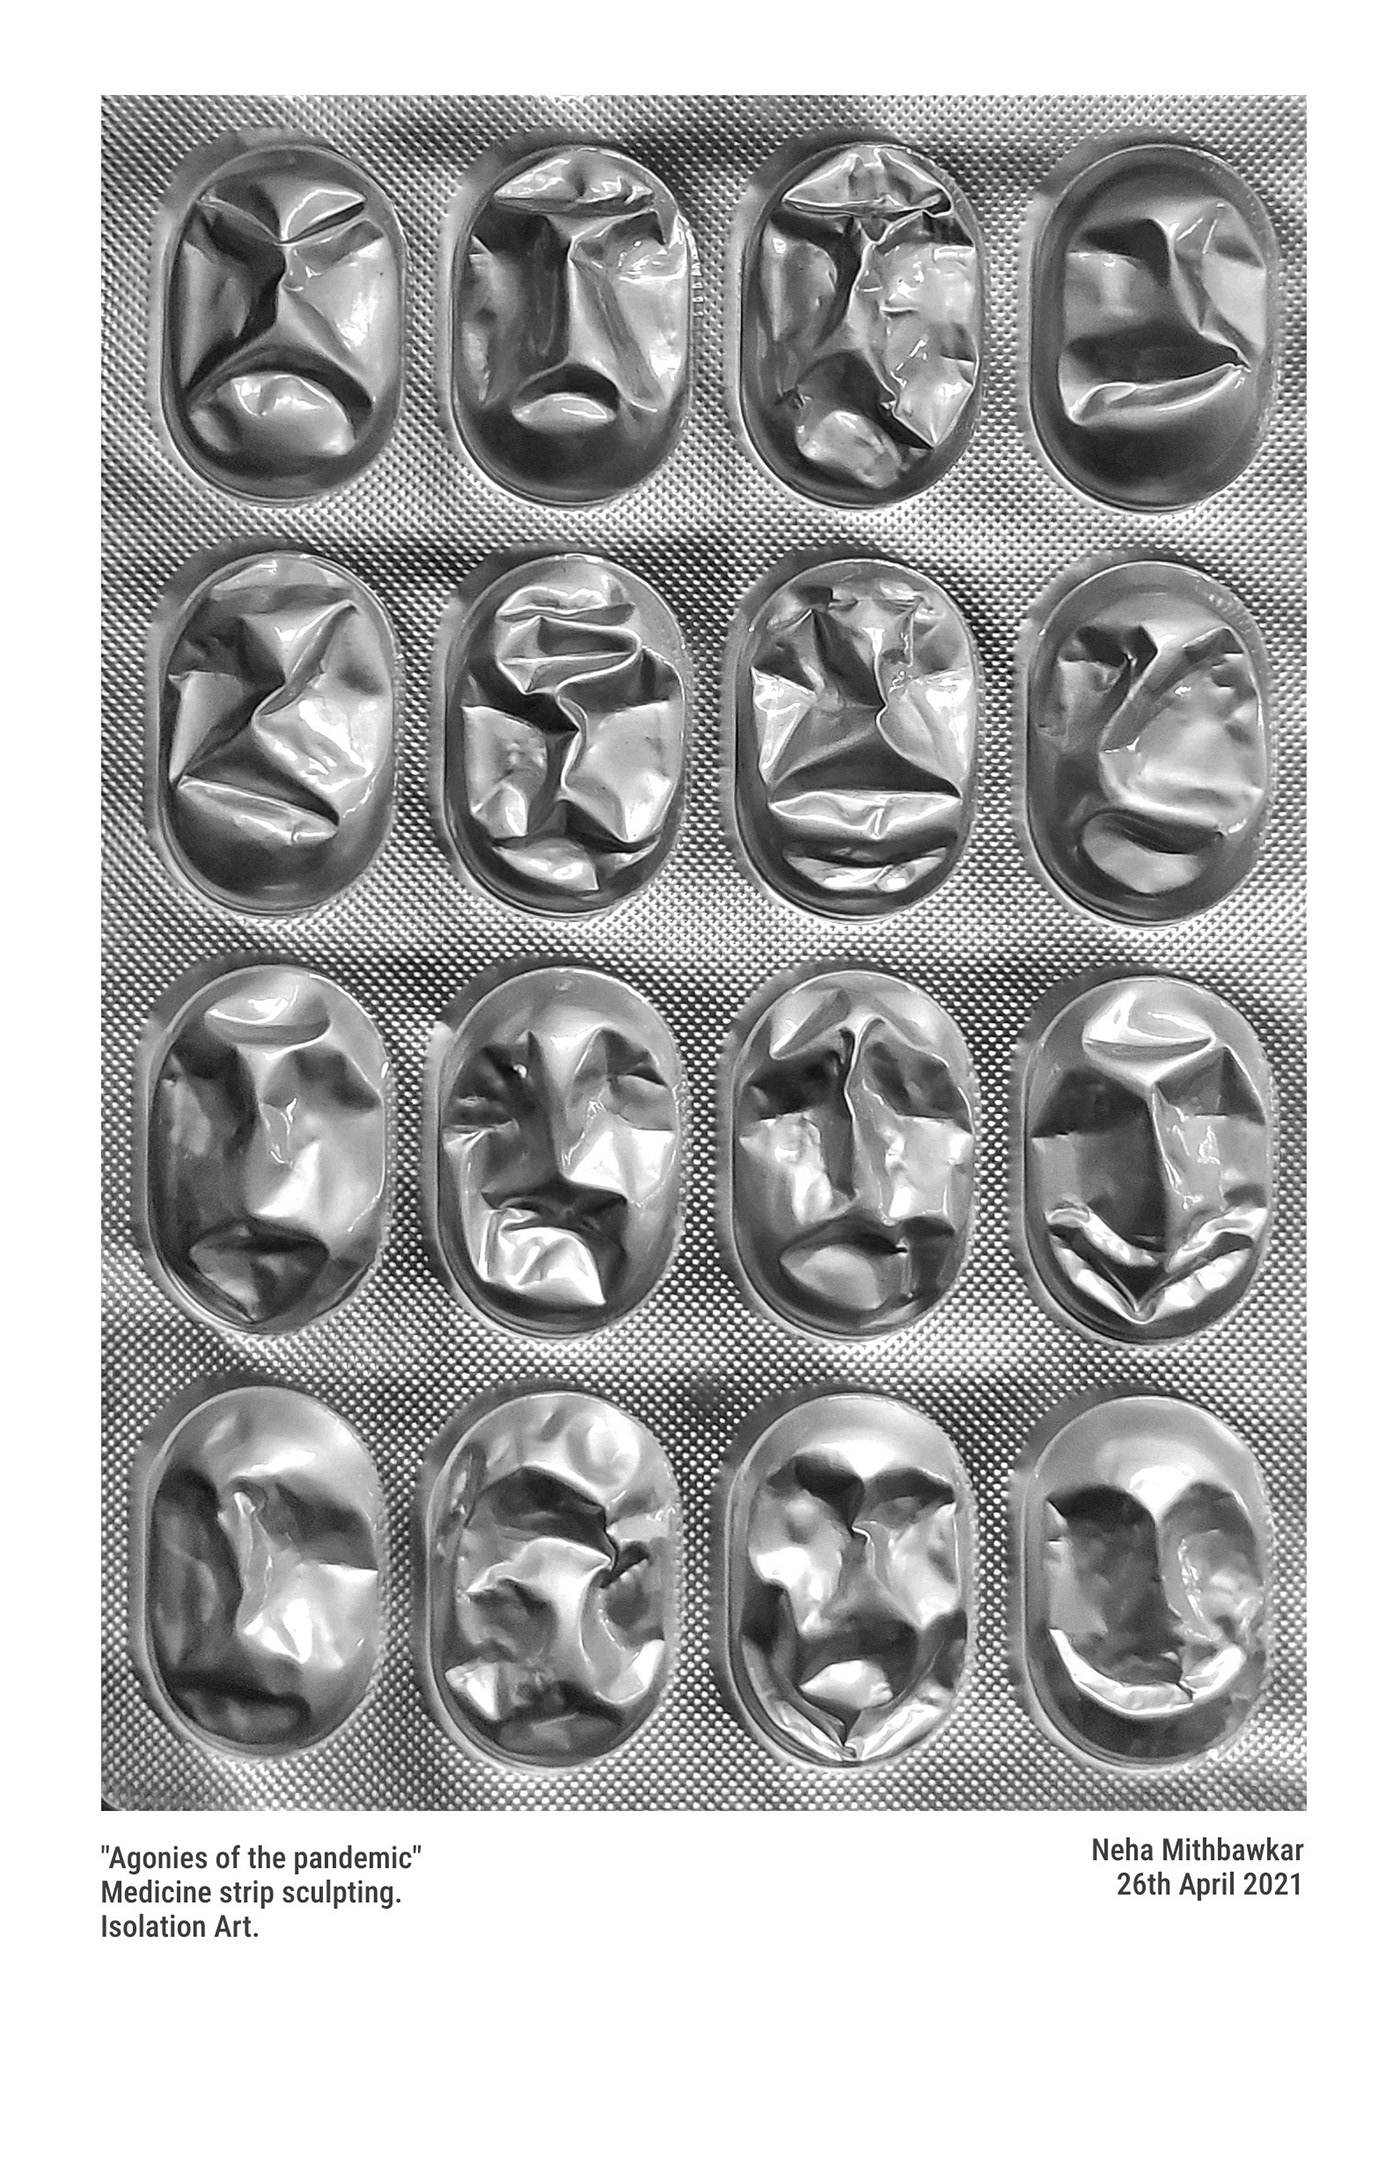 agony carved faces corona virus Covid 19 favipiravir fabiflu foil art isolation art medicine pandemicart sculpture strip sculpting tablets